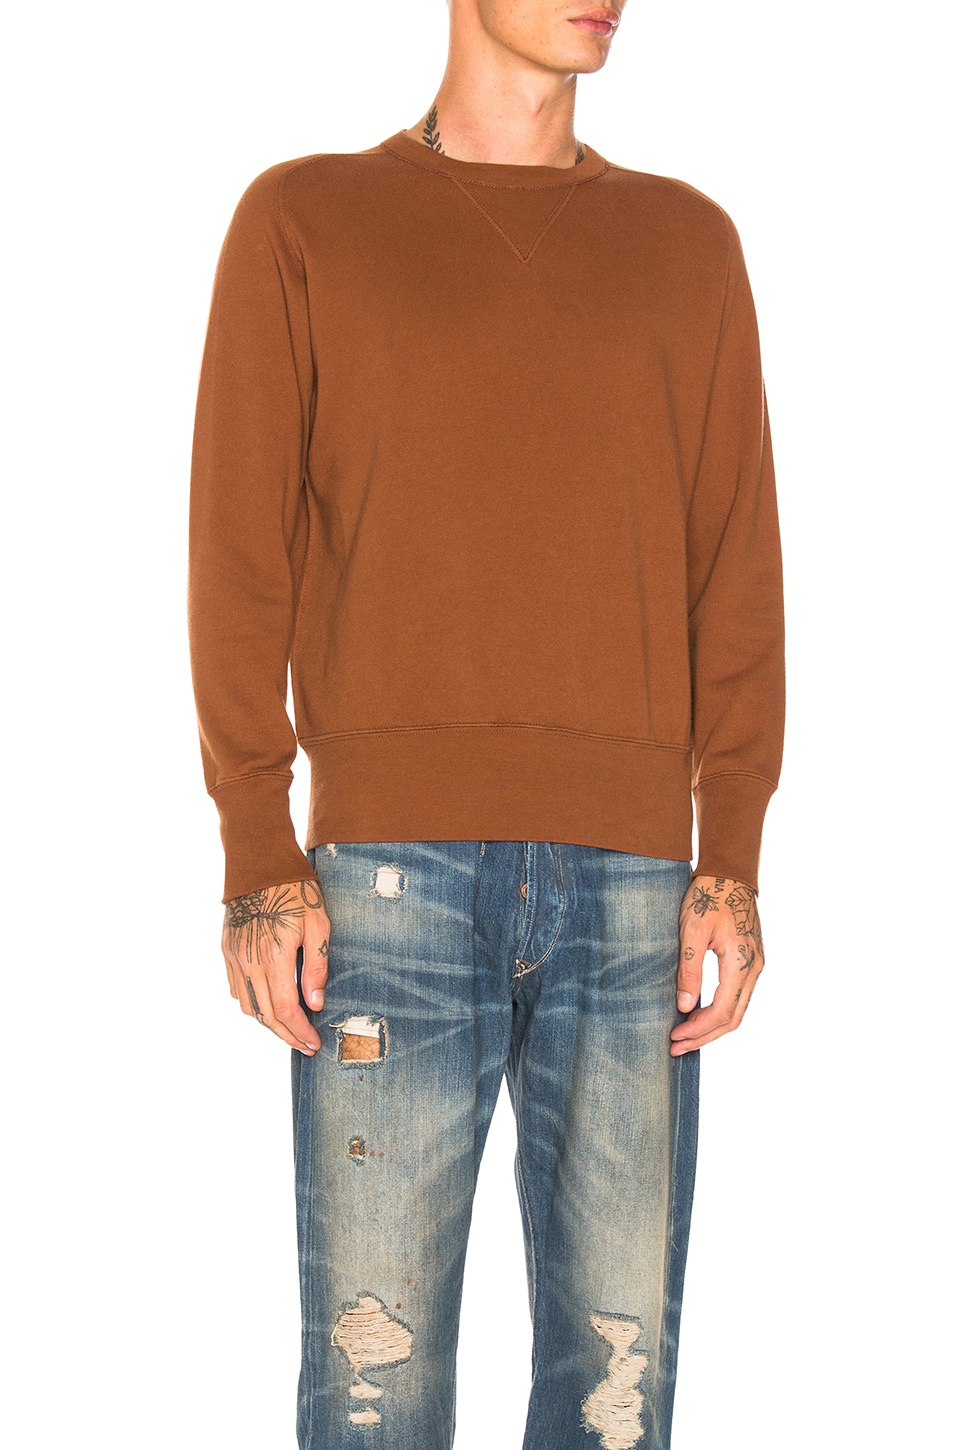 LEVI'S Vintage Clothing Bay Meadows Sweatshirt in Earth Brown | REVOLVE